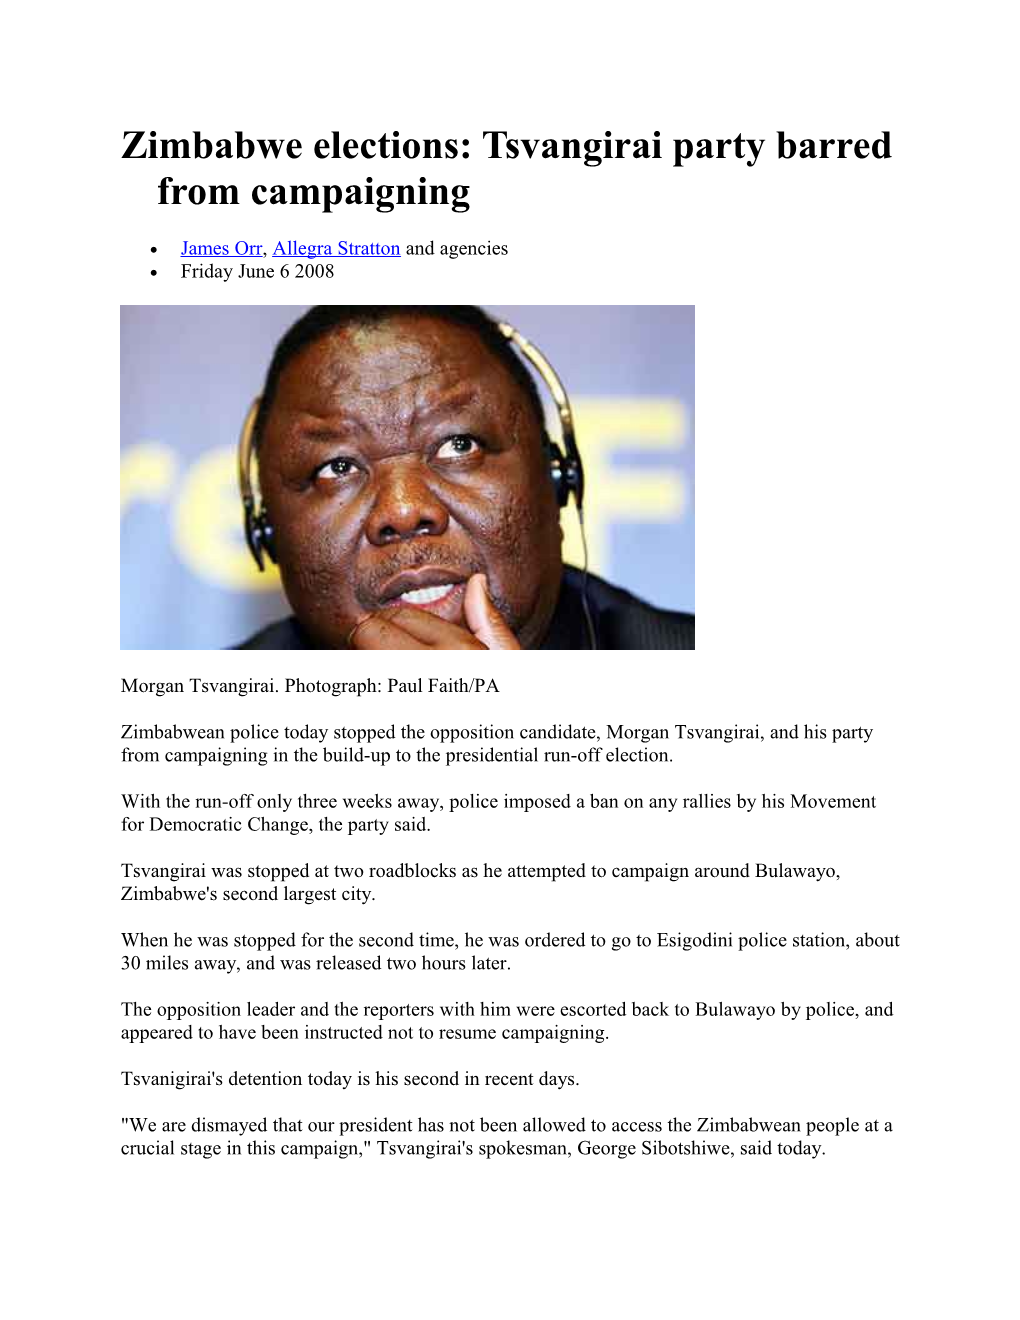 Zimbabwe Elections: Tsvangirai Party Barred from Campaigning